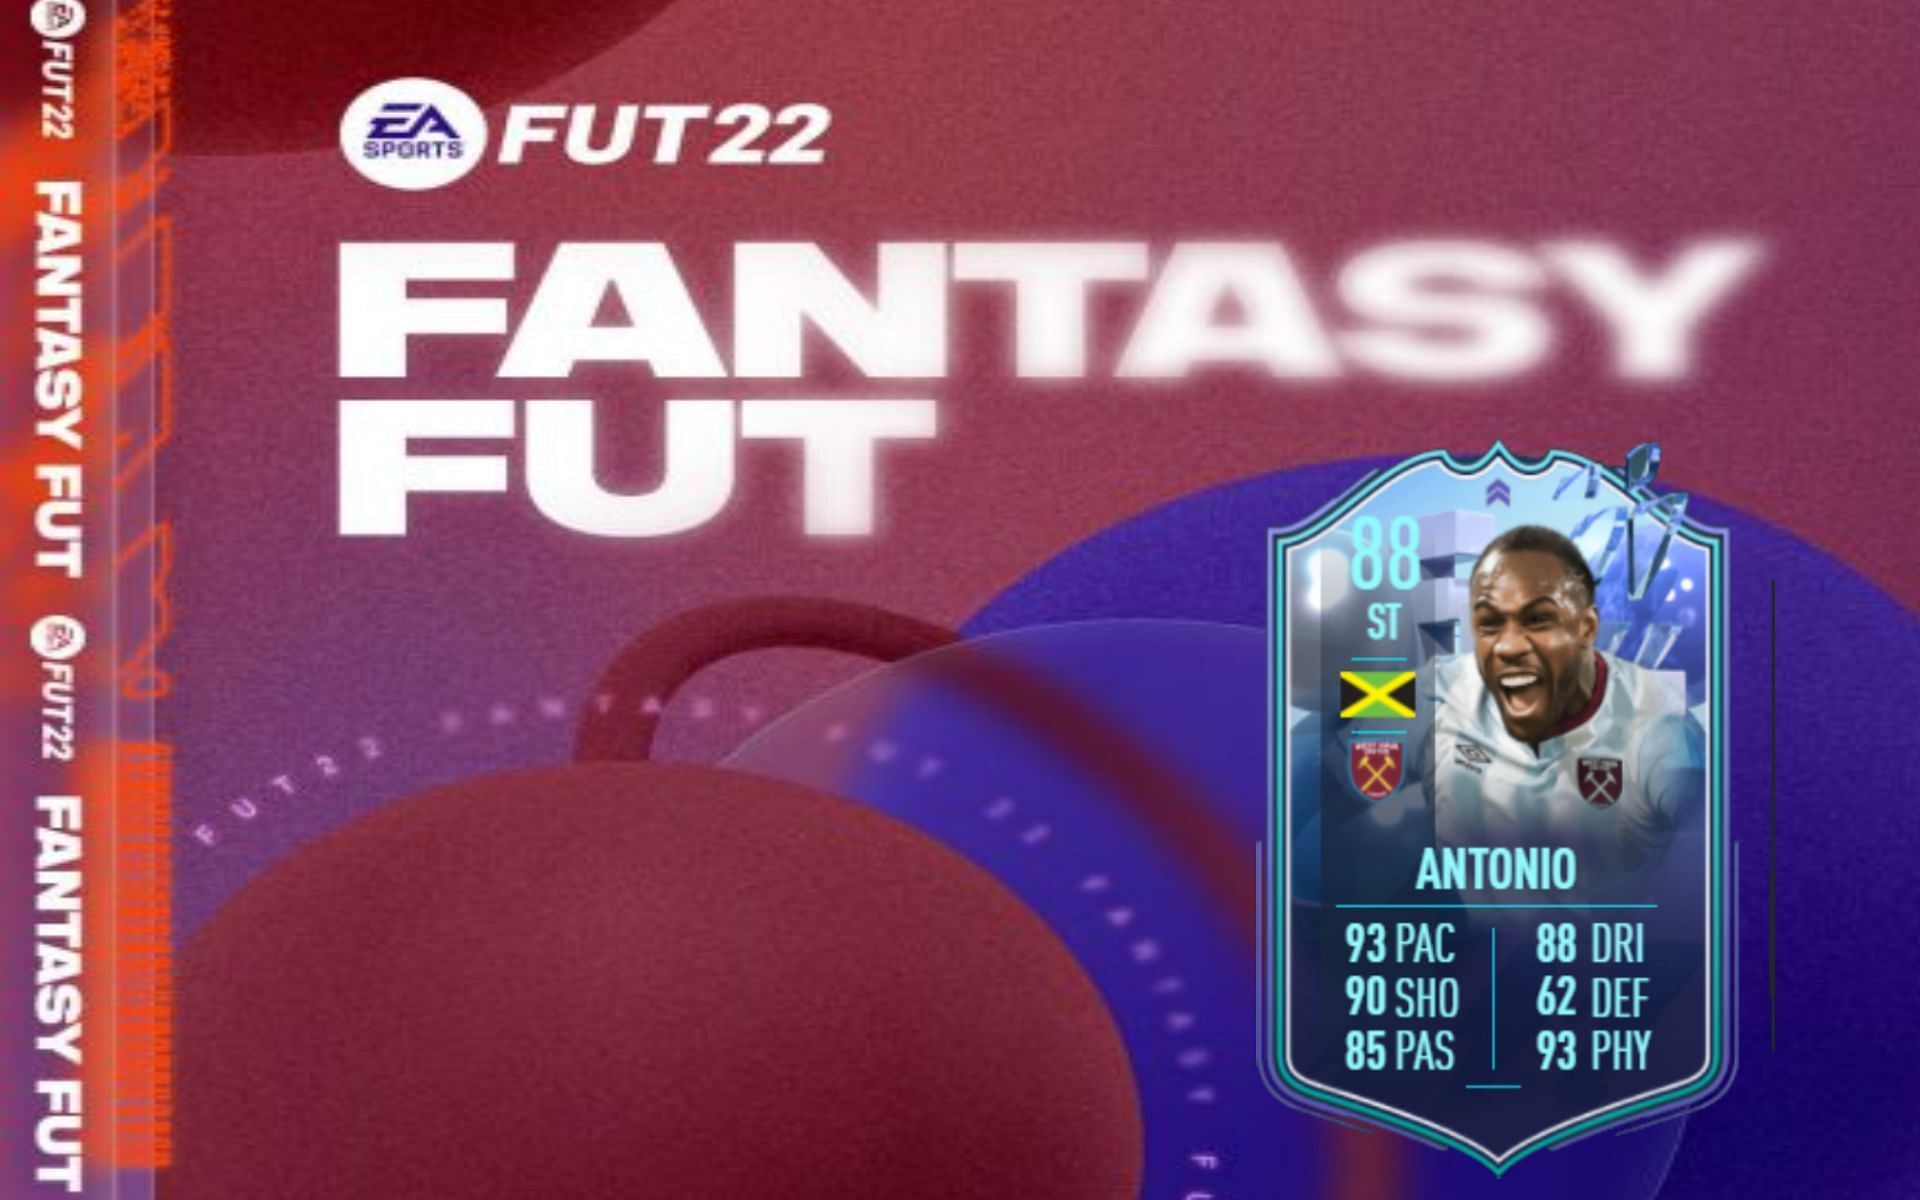 Michail Antonio FUT Fantasy card in FIFA 22 Ultimate Team (Image via Sportskeeda)